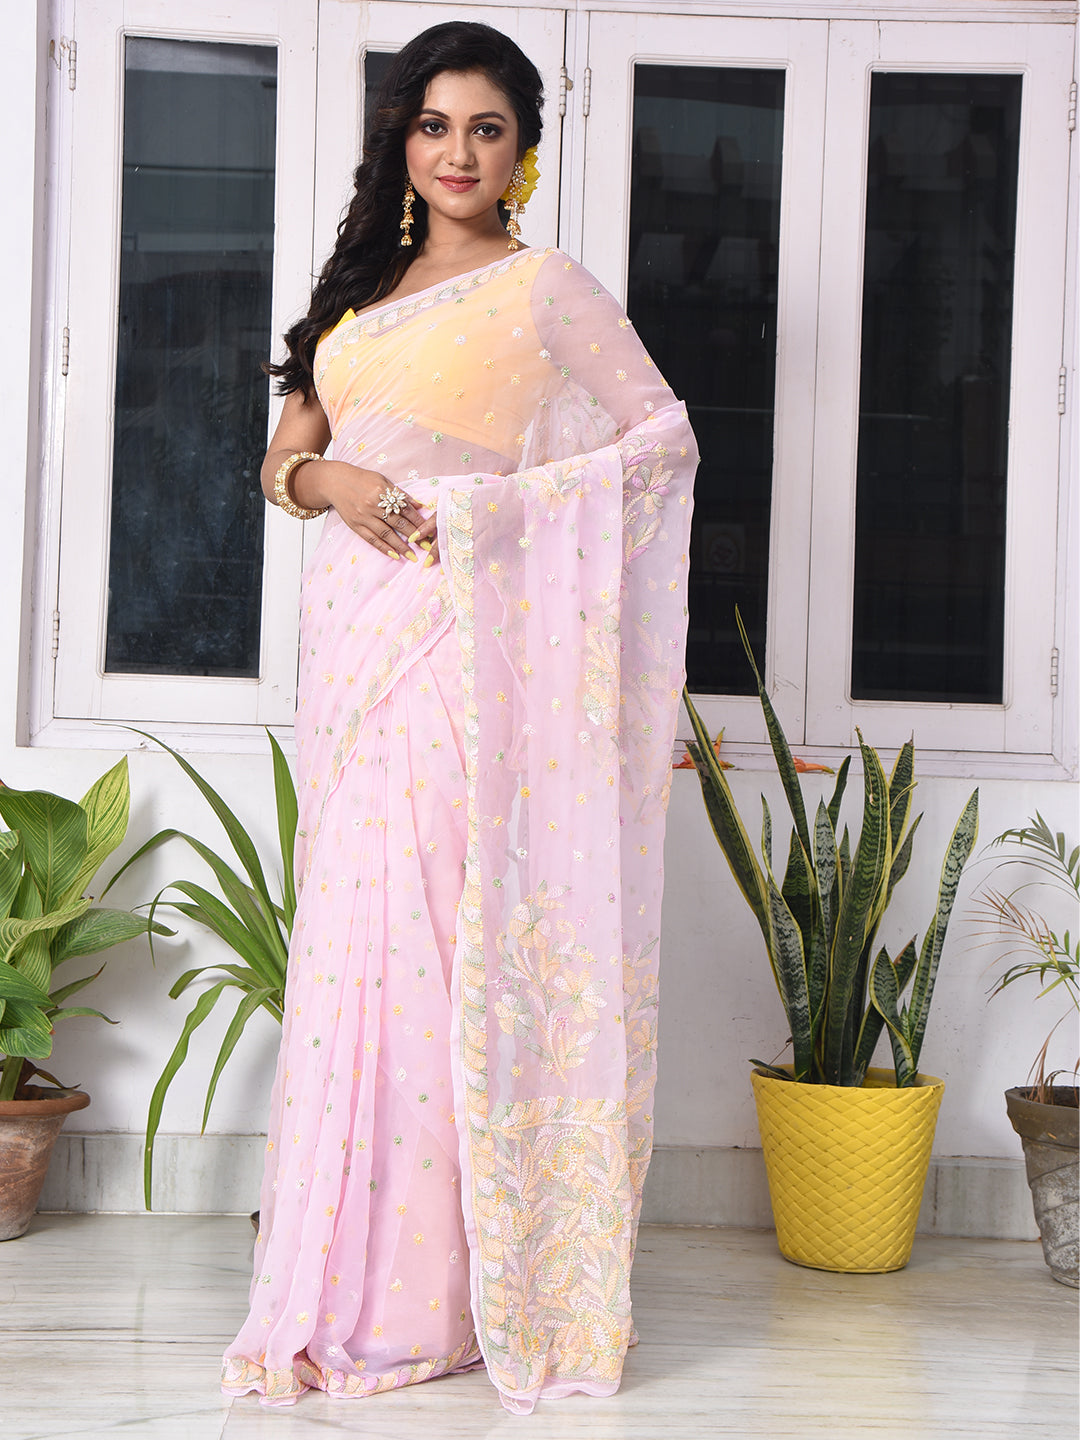 'Pink Rainbow' Georgette Chikankari Saree with multithread embroidery